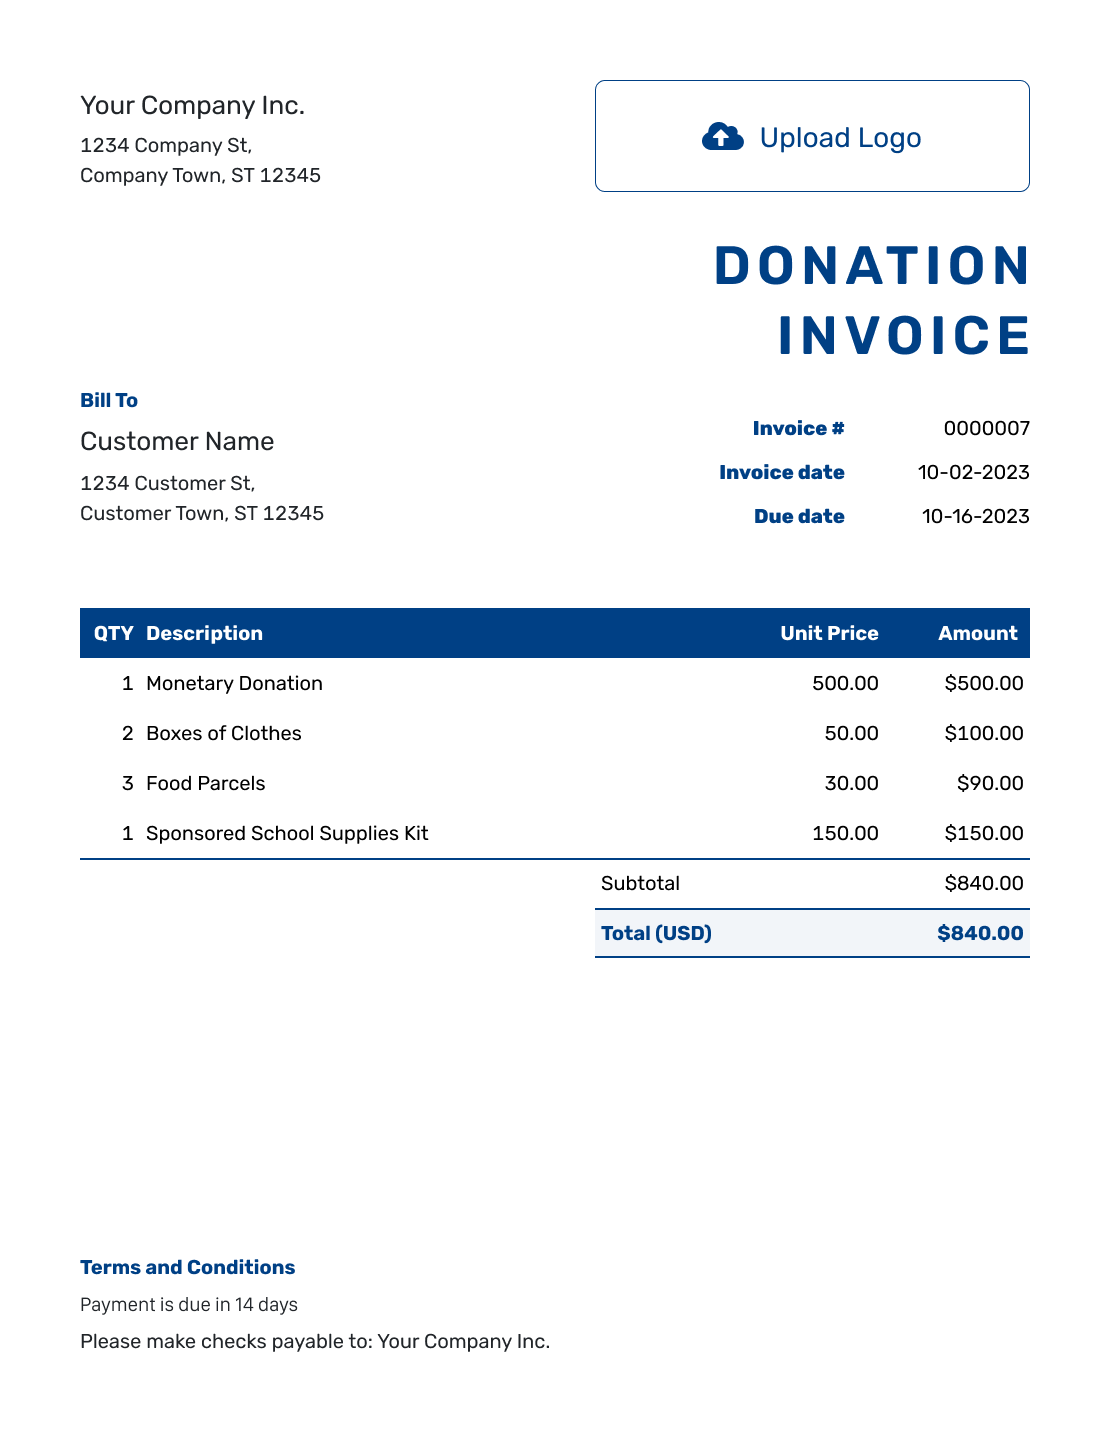 Sample Donation Invoice Template